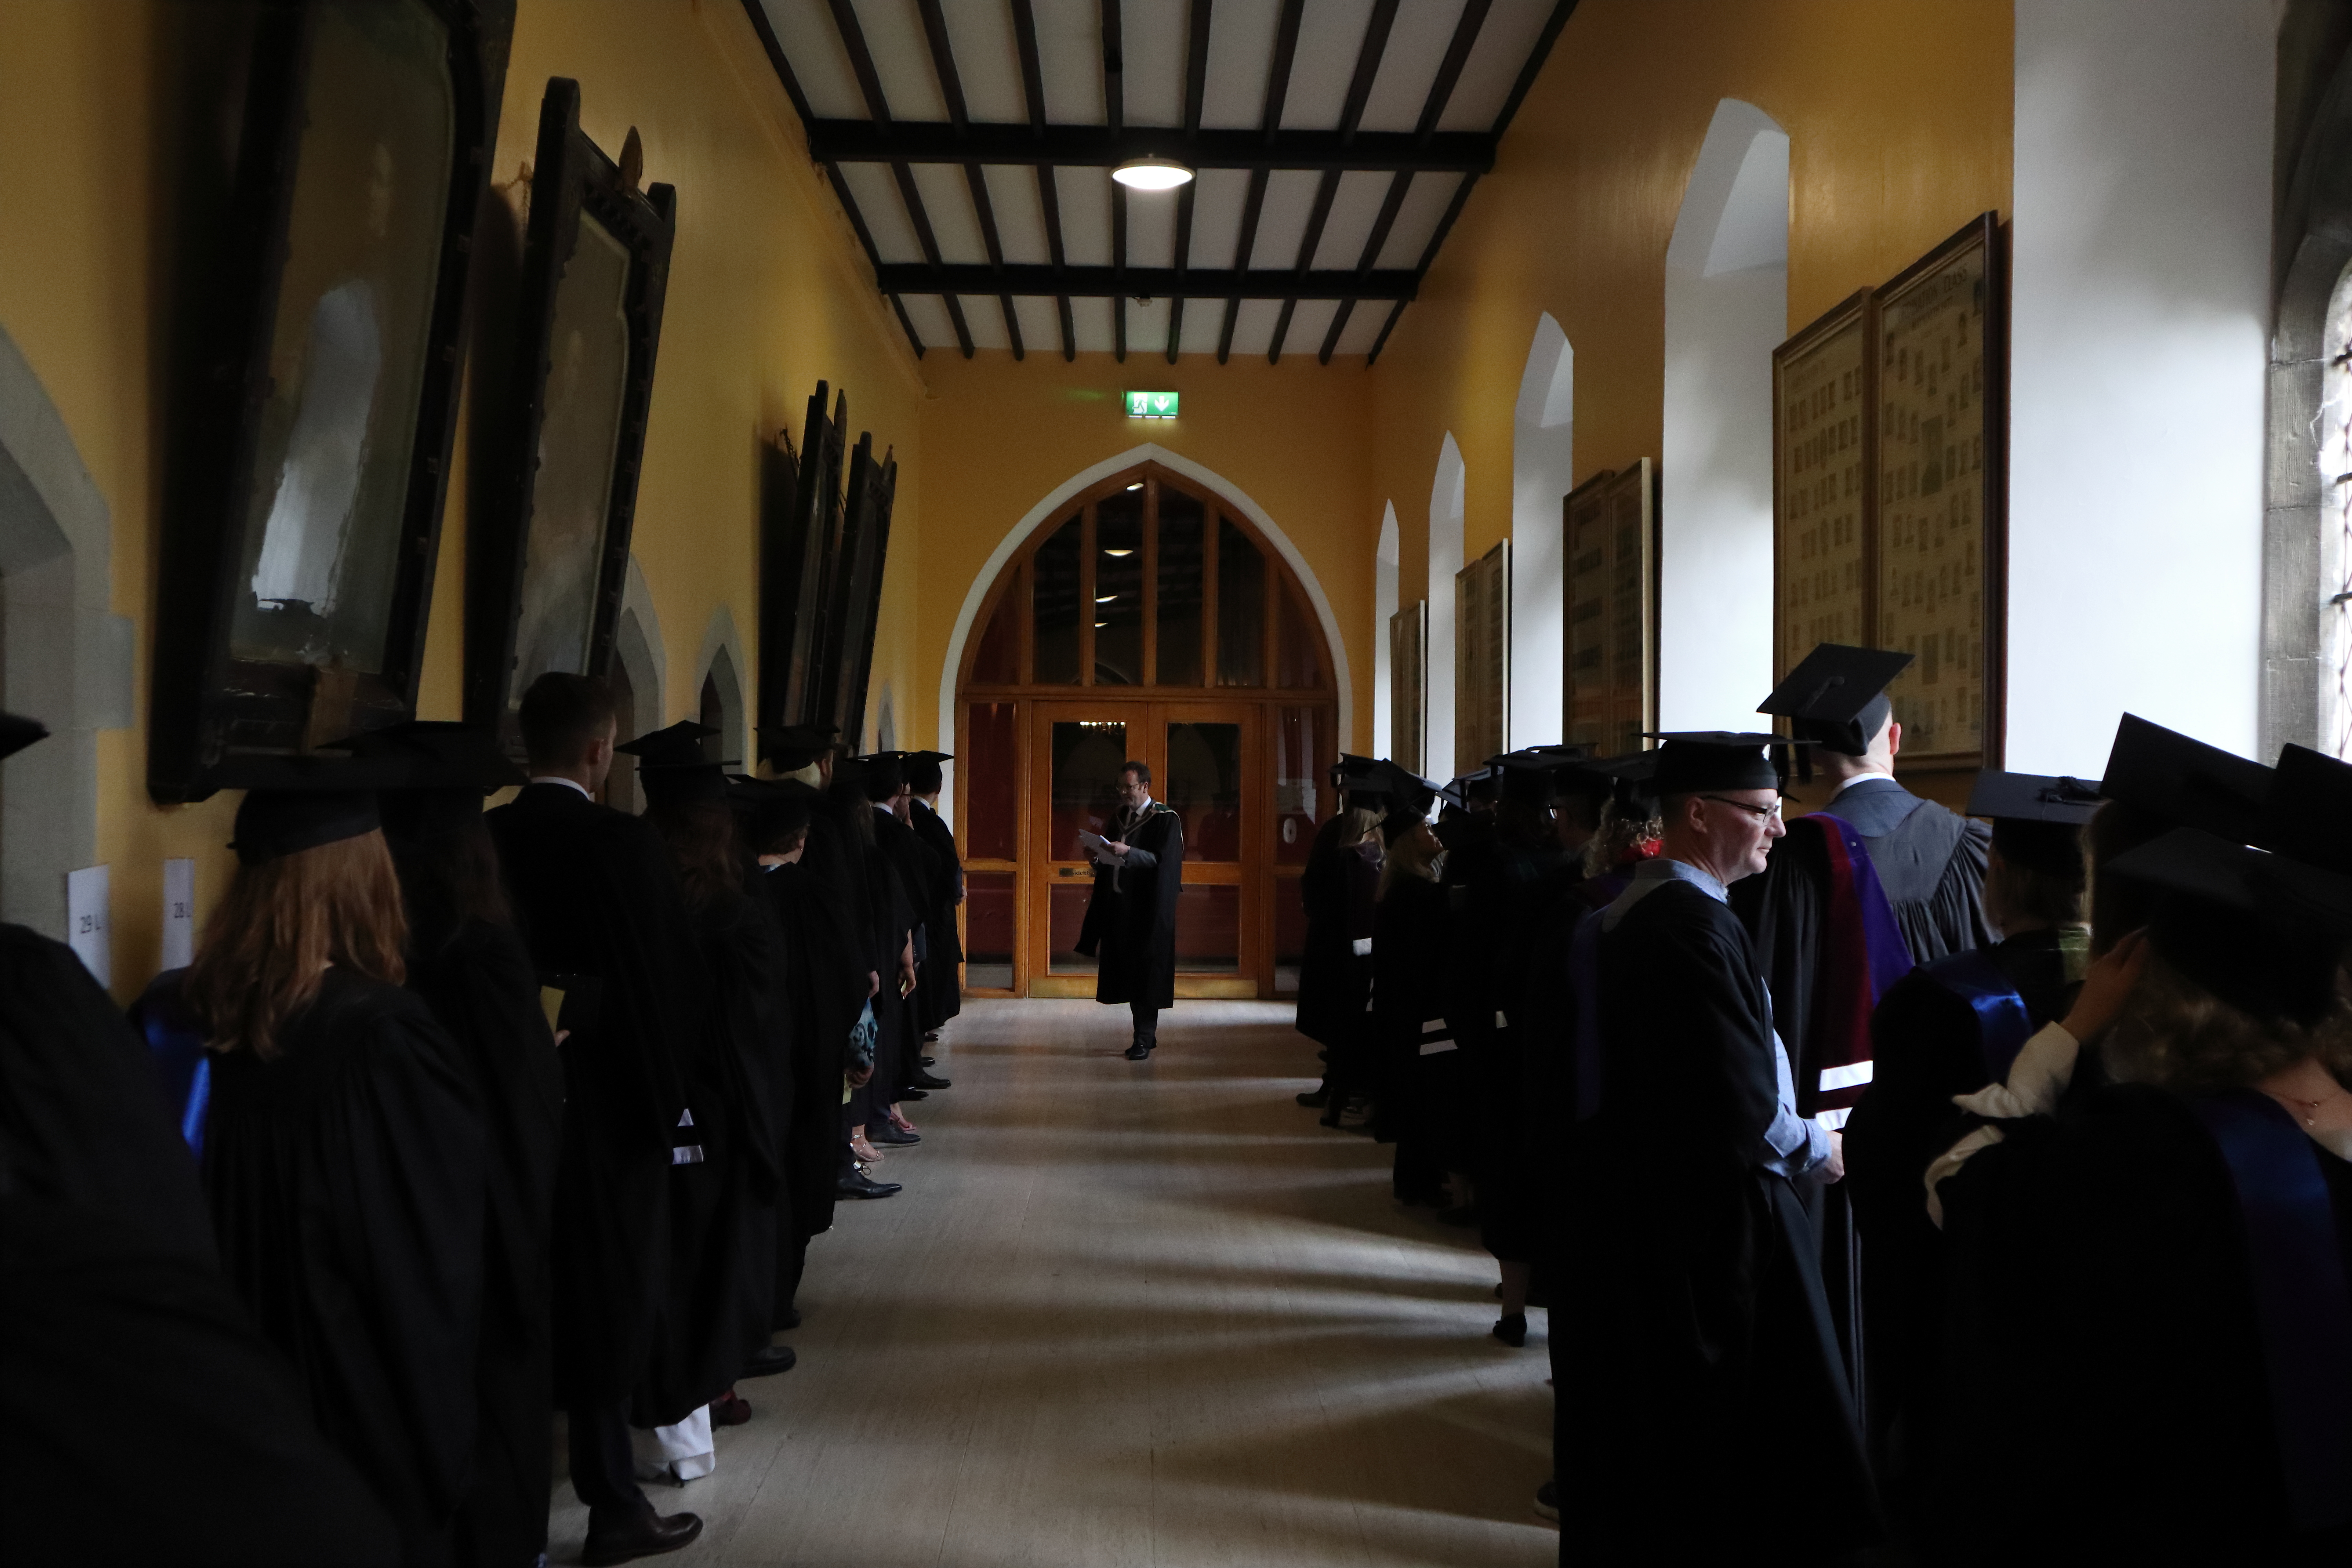 Graduates-in-hallway.JPG#asset:14832